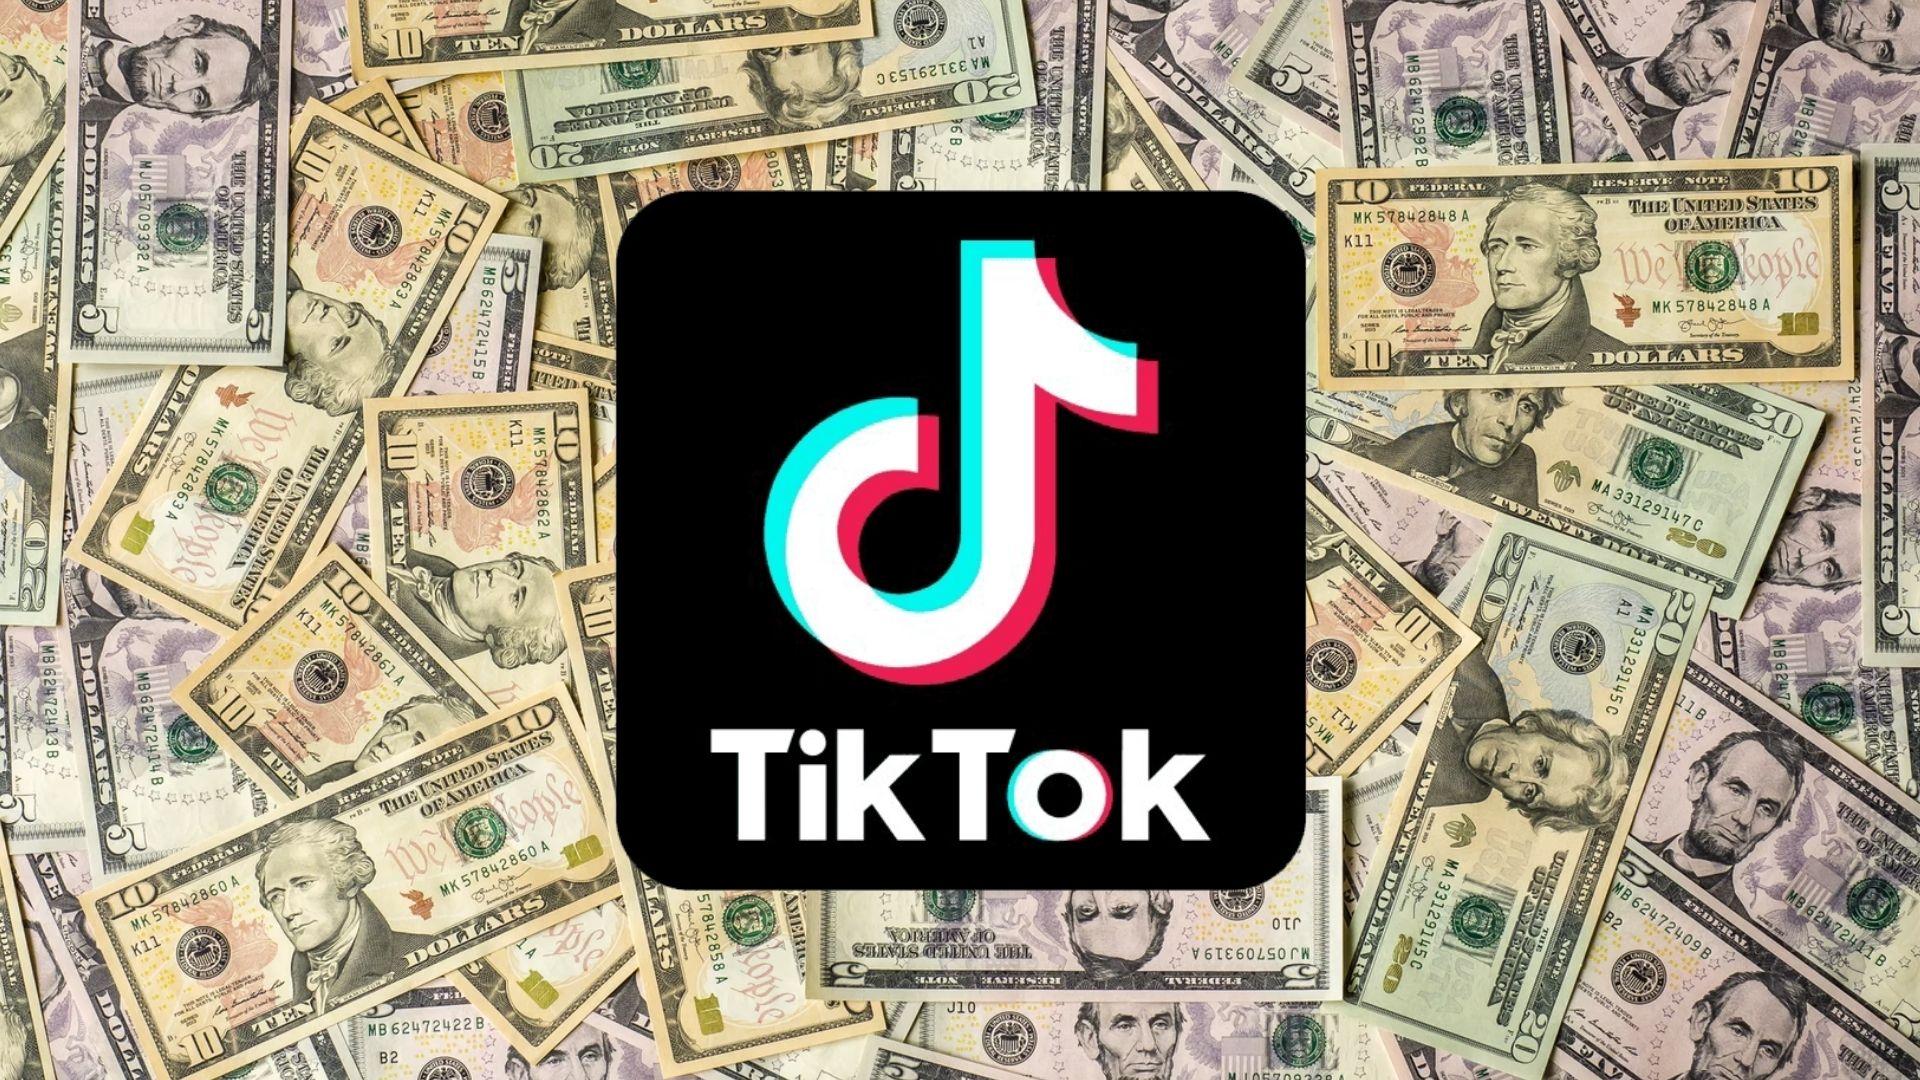 TikTok logo surrounded by money